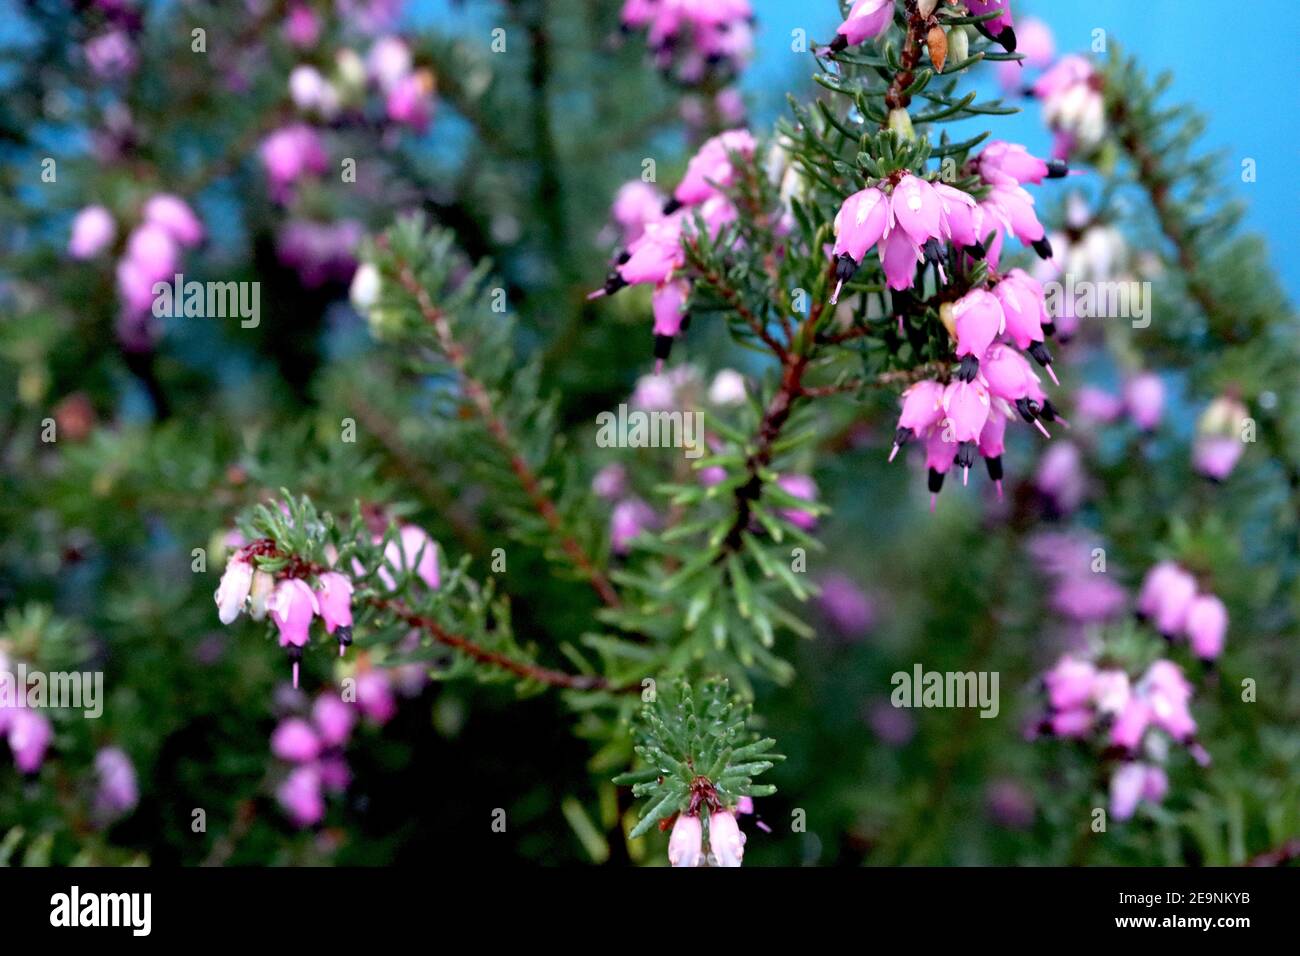 Erica x darleyensis ‘Mary Helen’ Winter heather Mary Helen – tiny urn-shaped pink flowers, black anthers, needle-like leaves,  February, England, UK Stock Photo